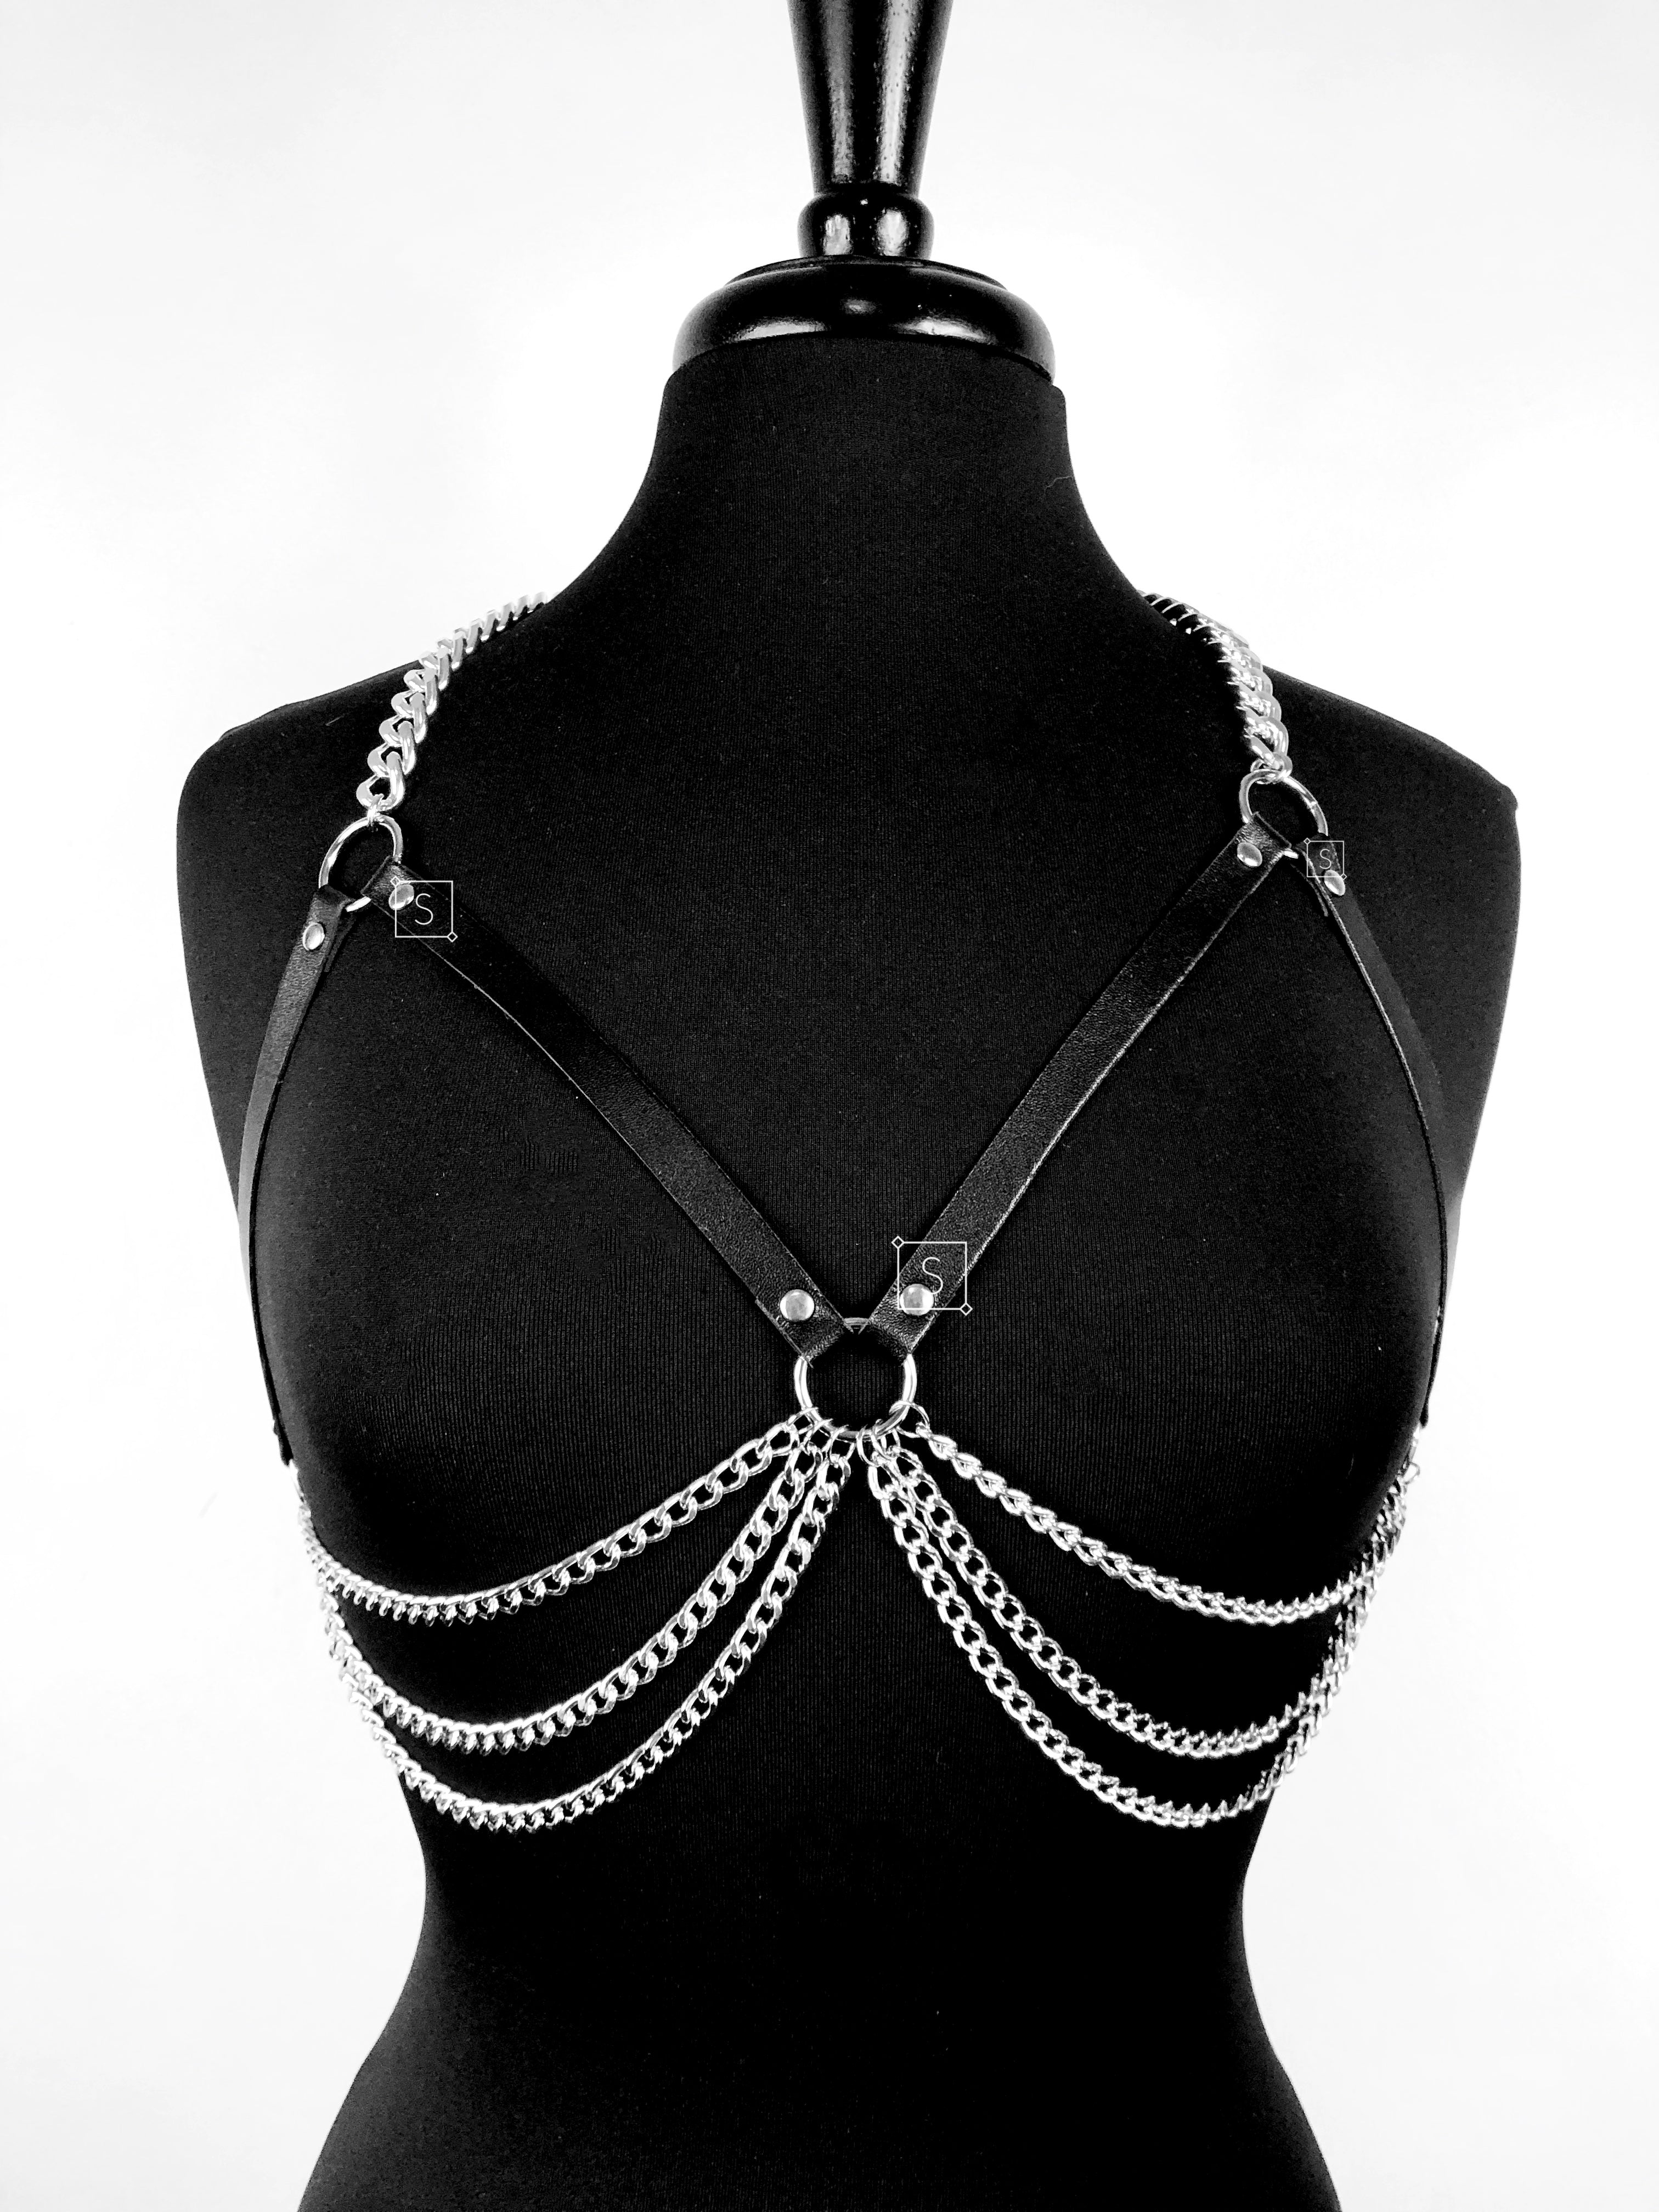 Minimal Chain Bralette by Stinnys